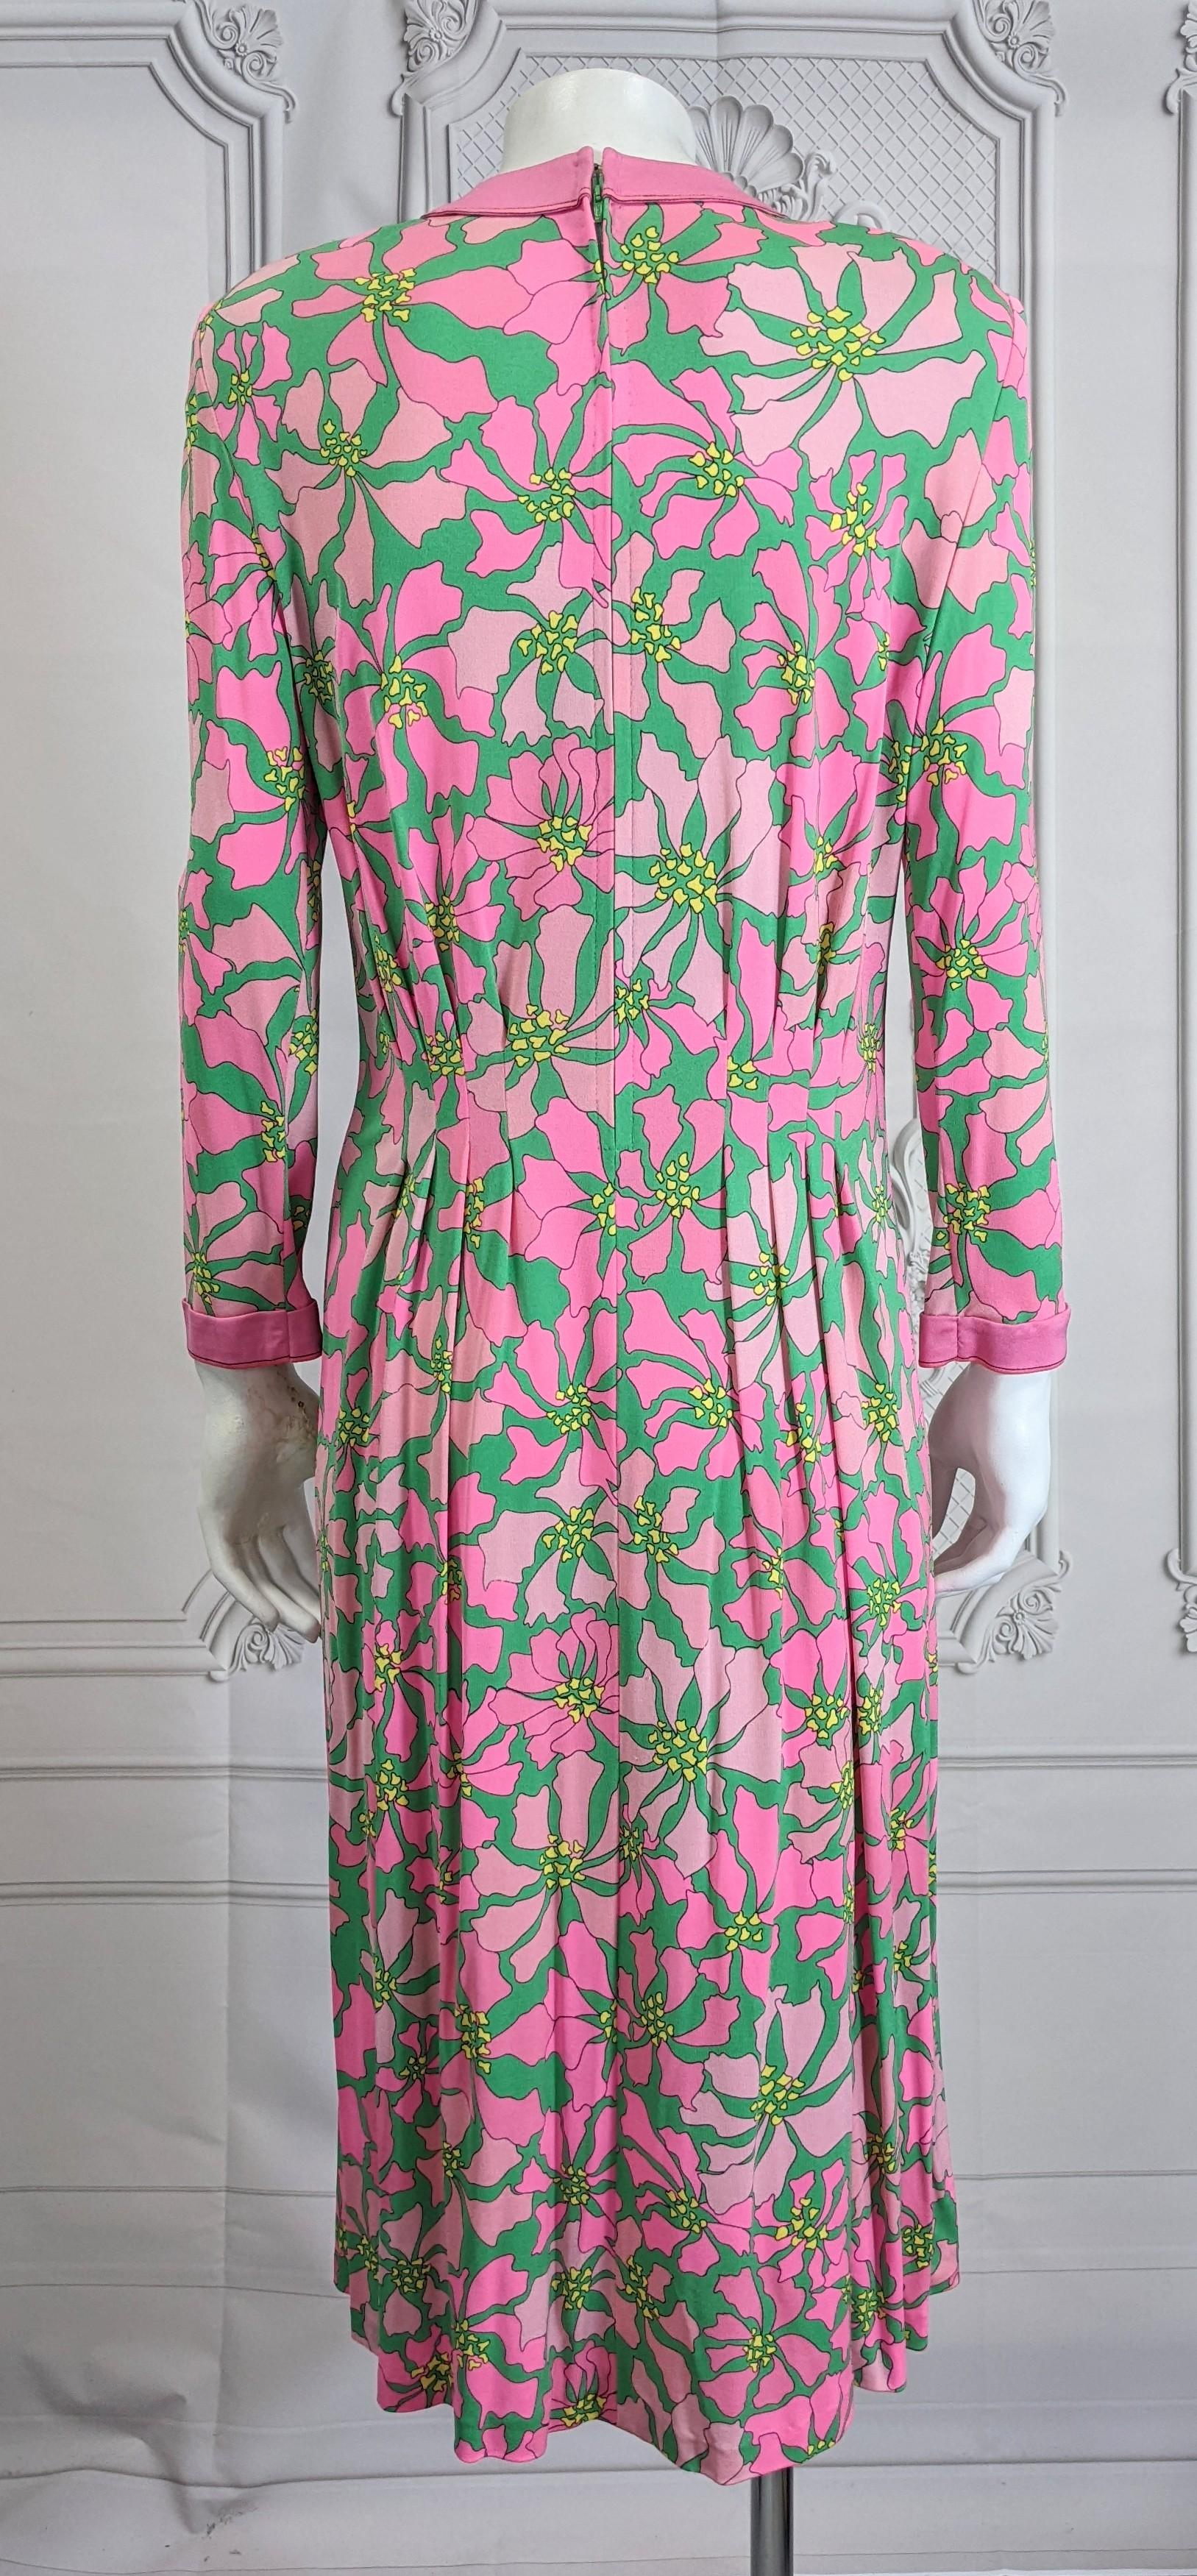 Bessi Silk Jersey Poinsettia Print Dress For Sale 2